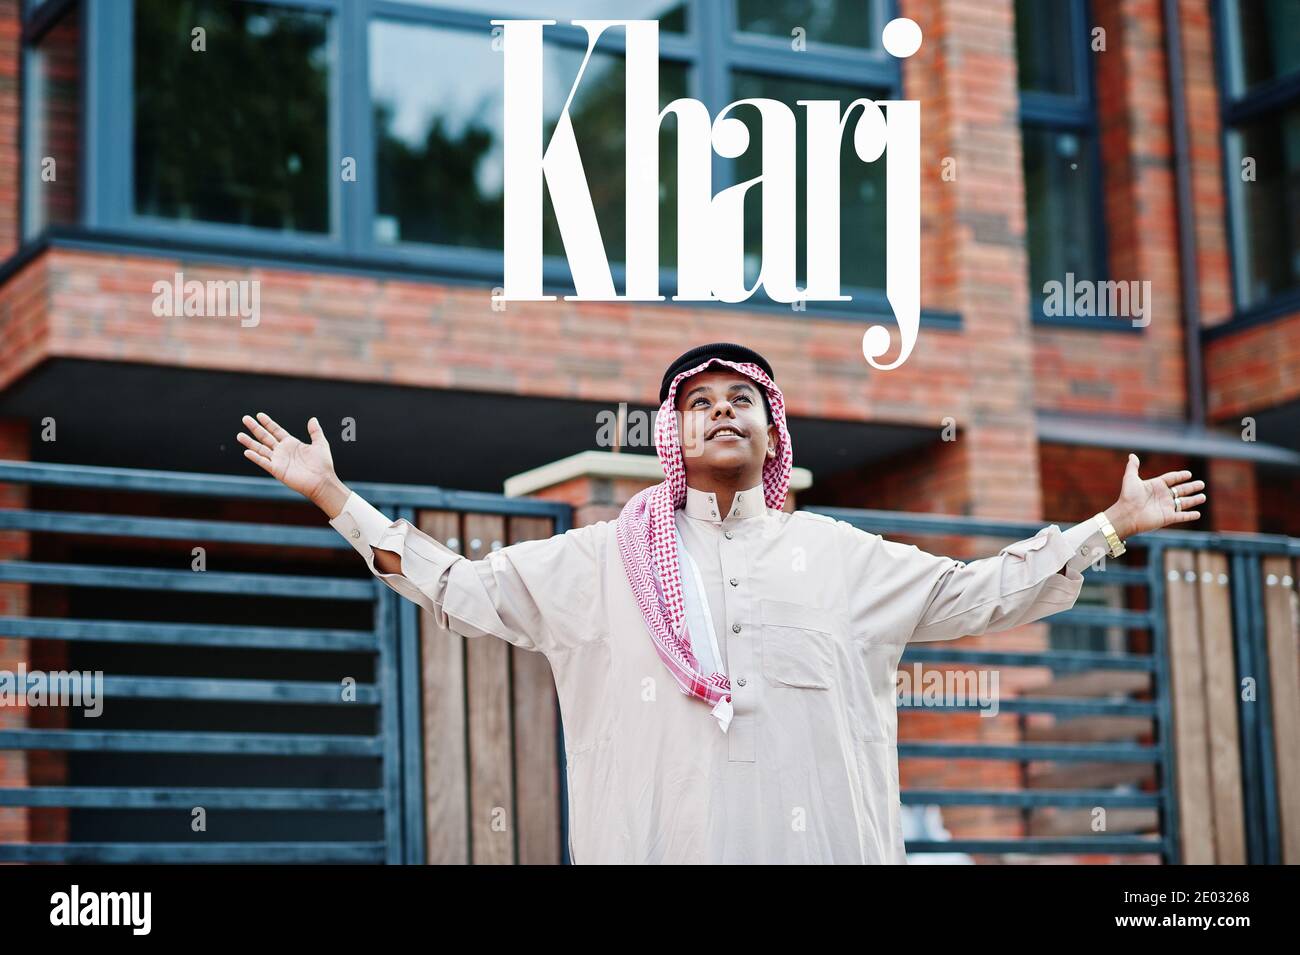 Kharj - biggest city of Saudi Arabia. Middle Eastern saudi arabian man posed on street against modern building up his hands in the air. Stock Photo